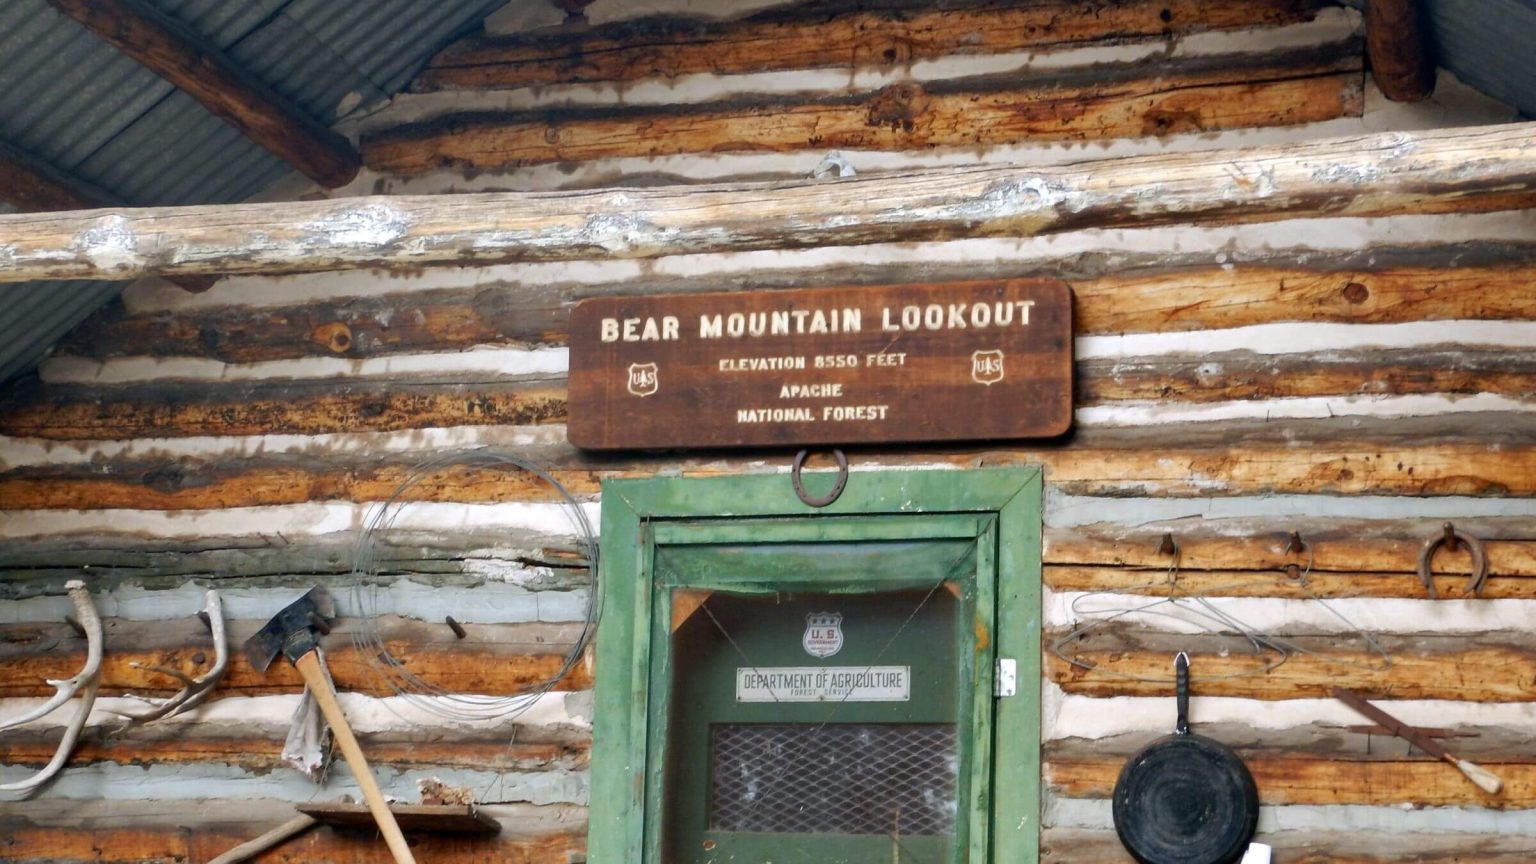 Blue Range Primitive Area, Bear Mountain Lookout cabin, April